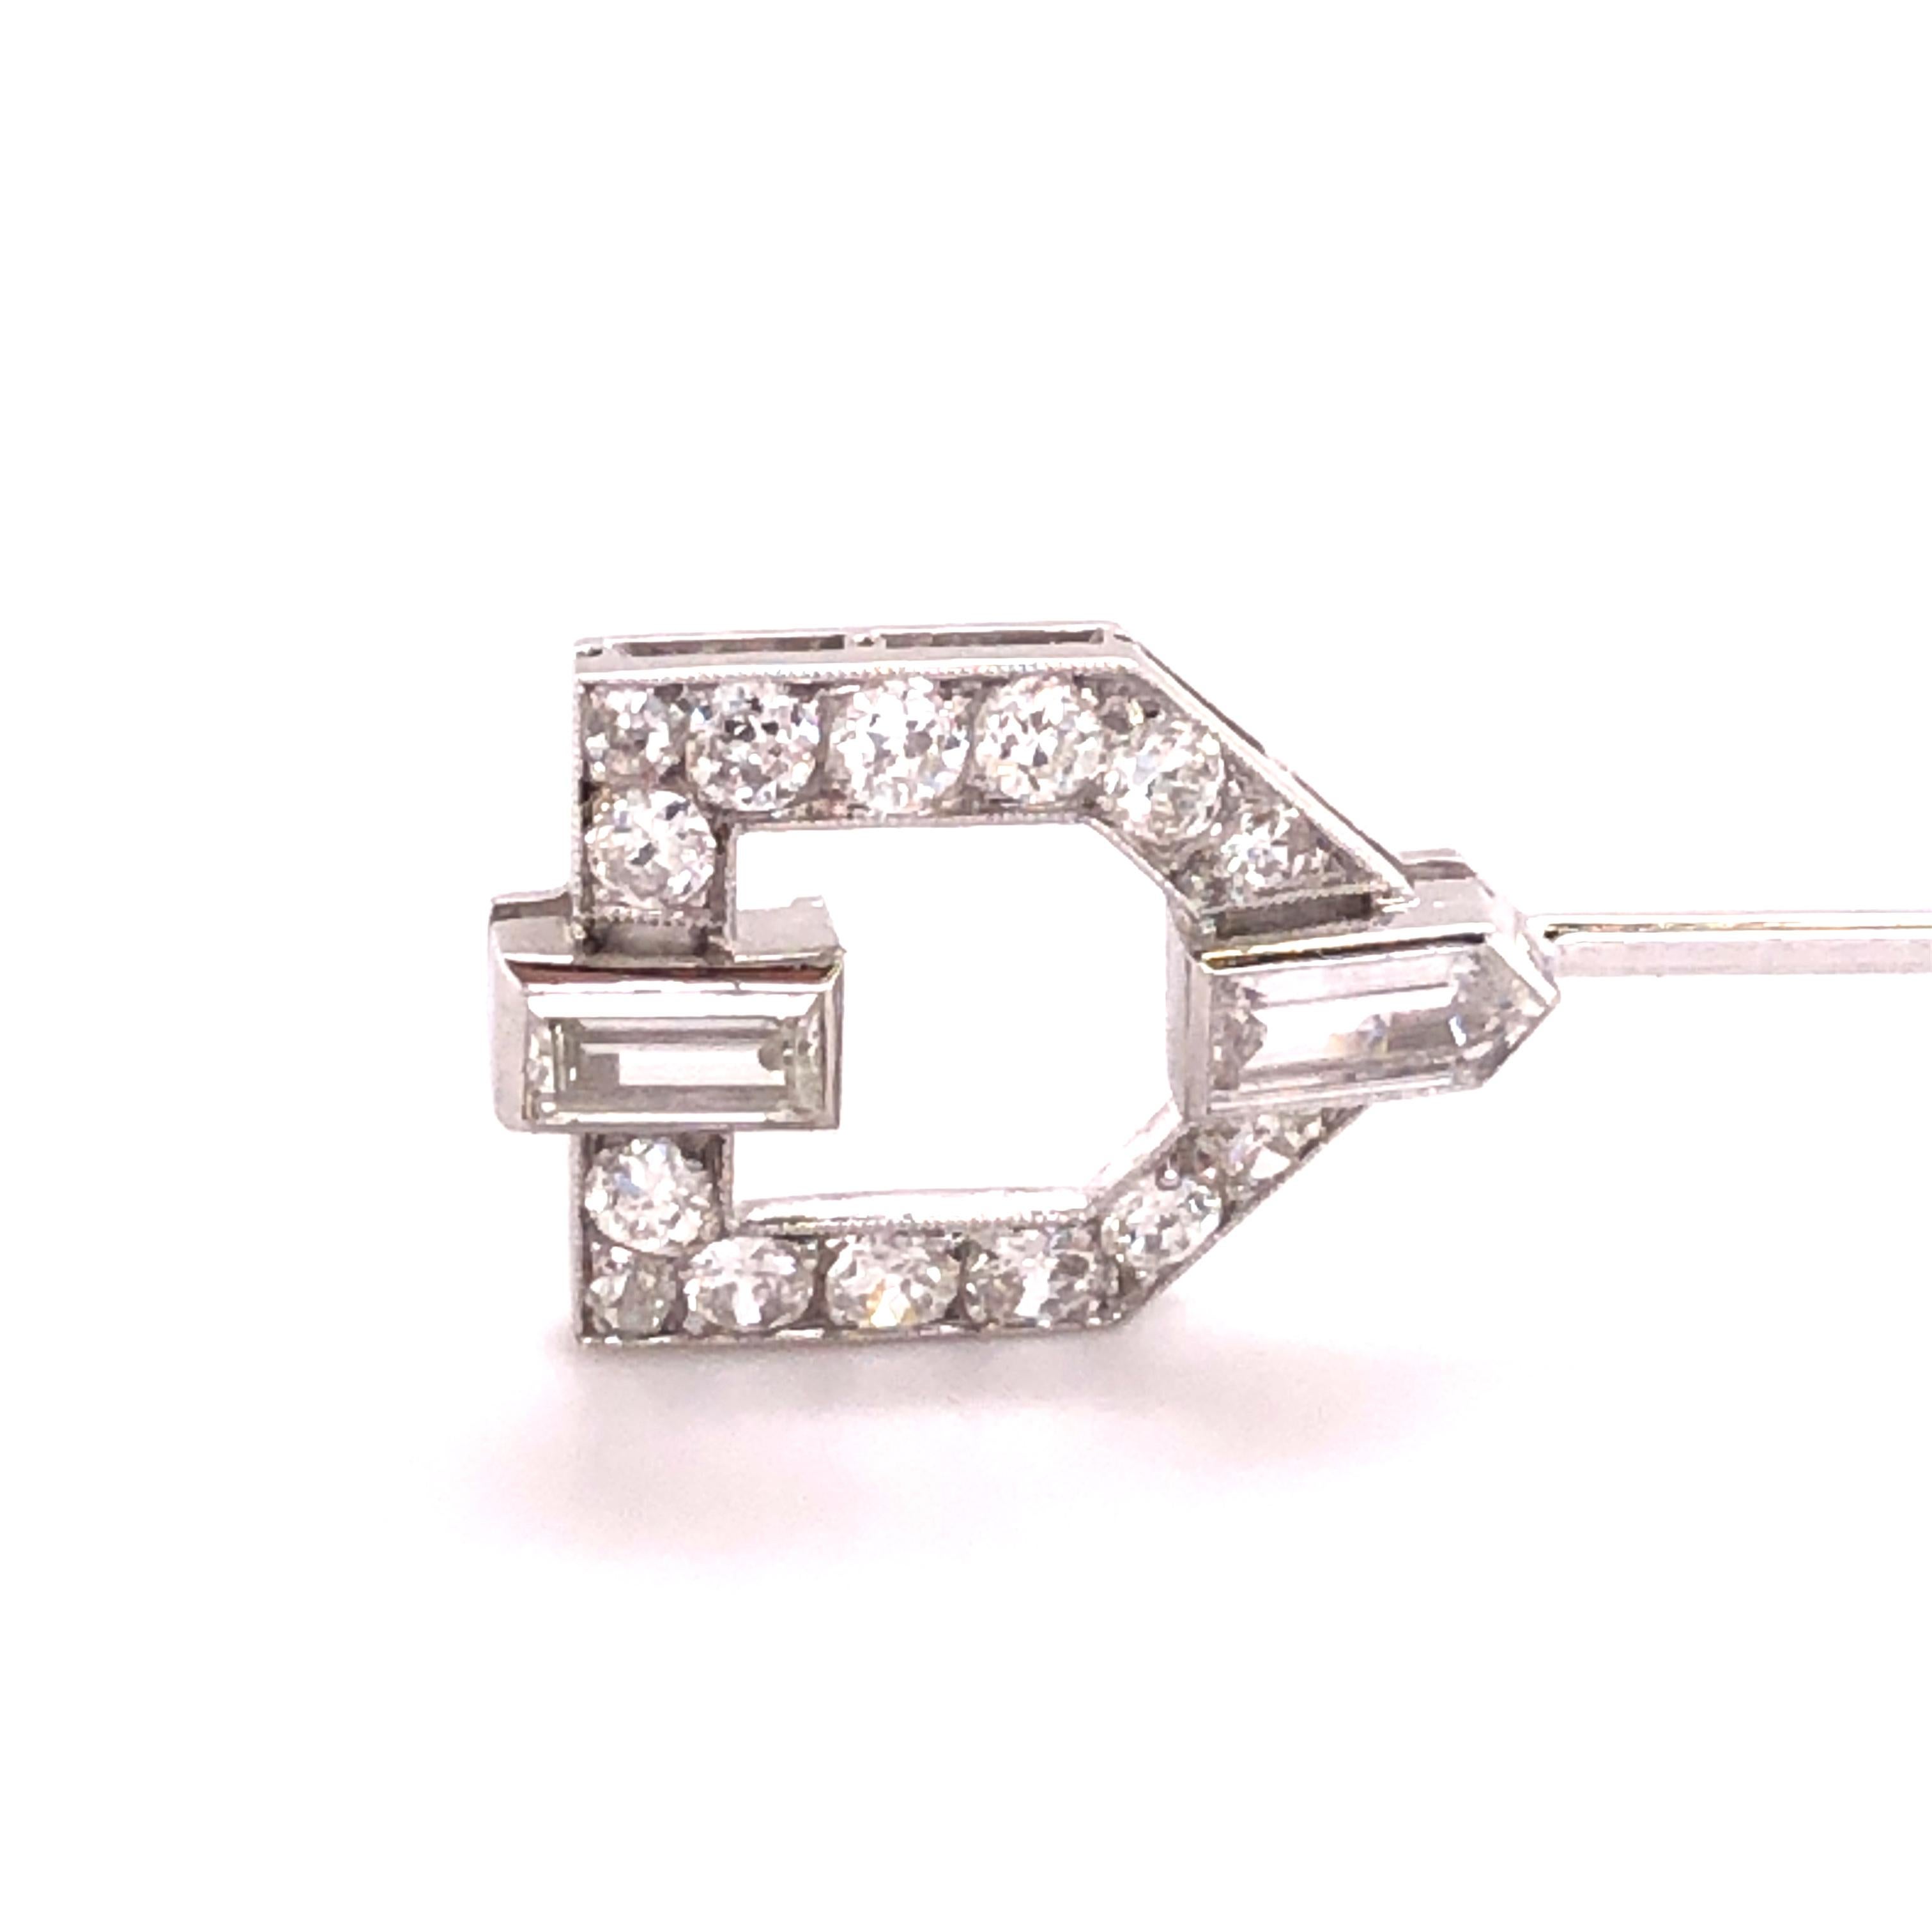 Art Deco Jabot Pin with Diamonds in Platinum and 18 Karat White Gold (Baguetteschliff)